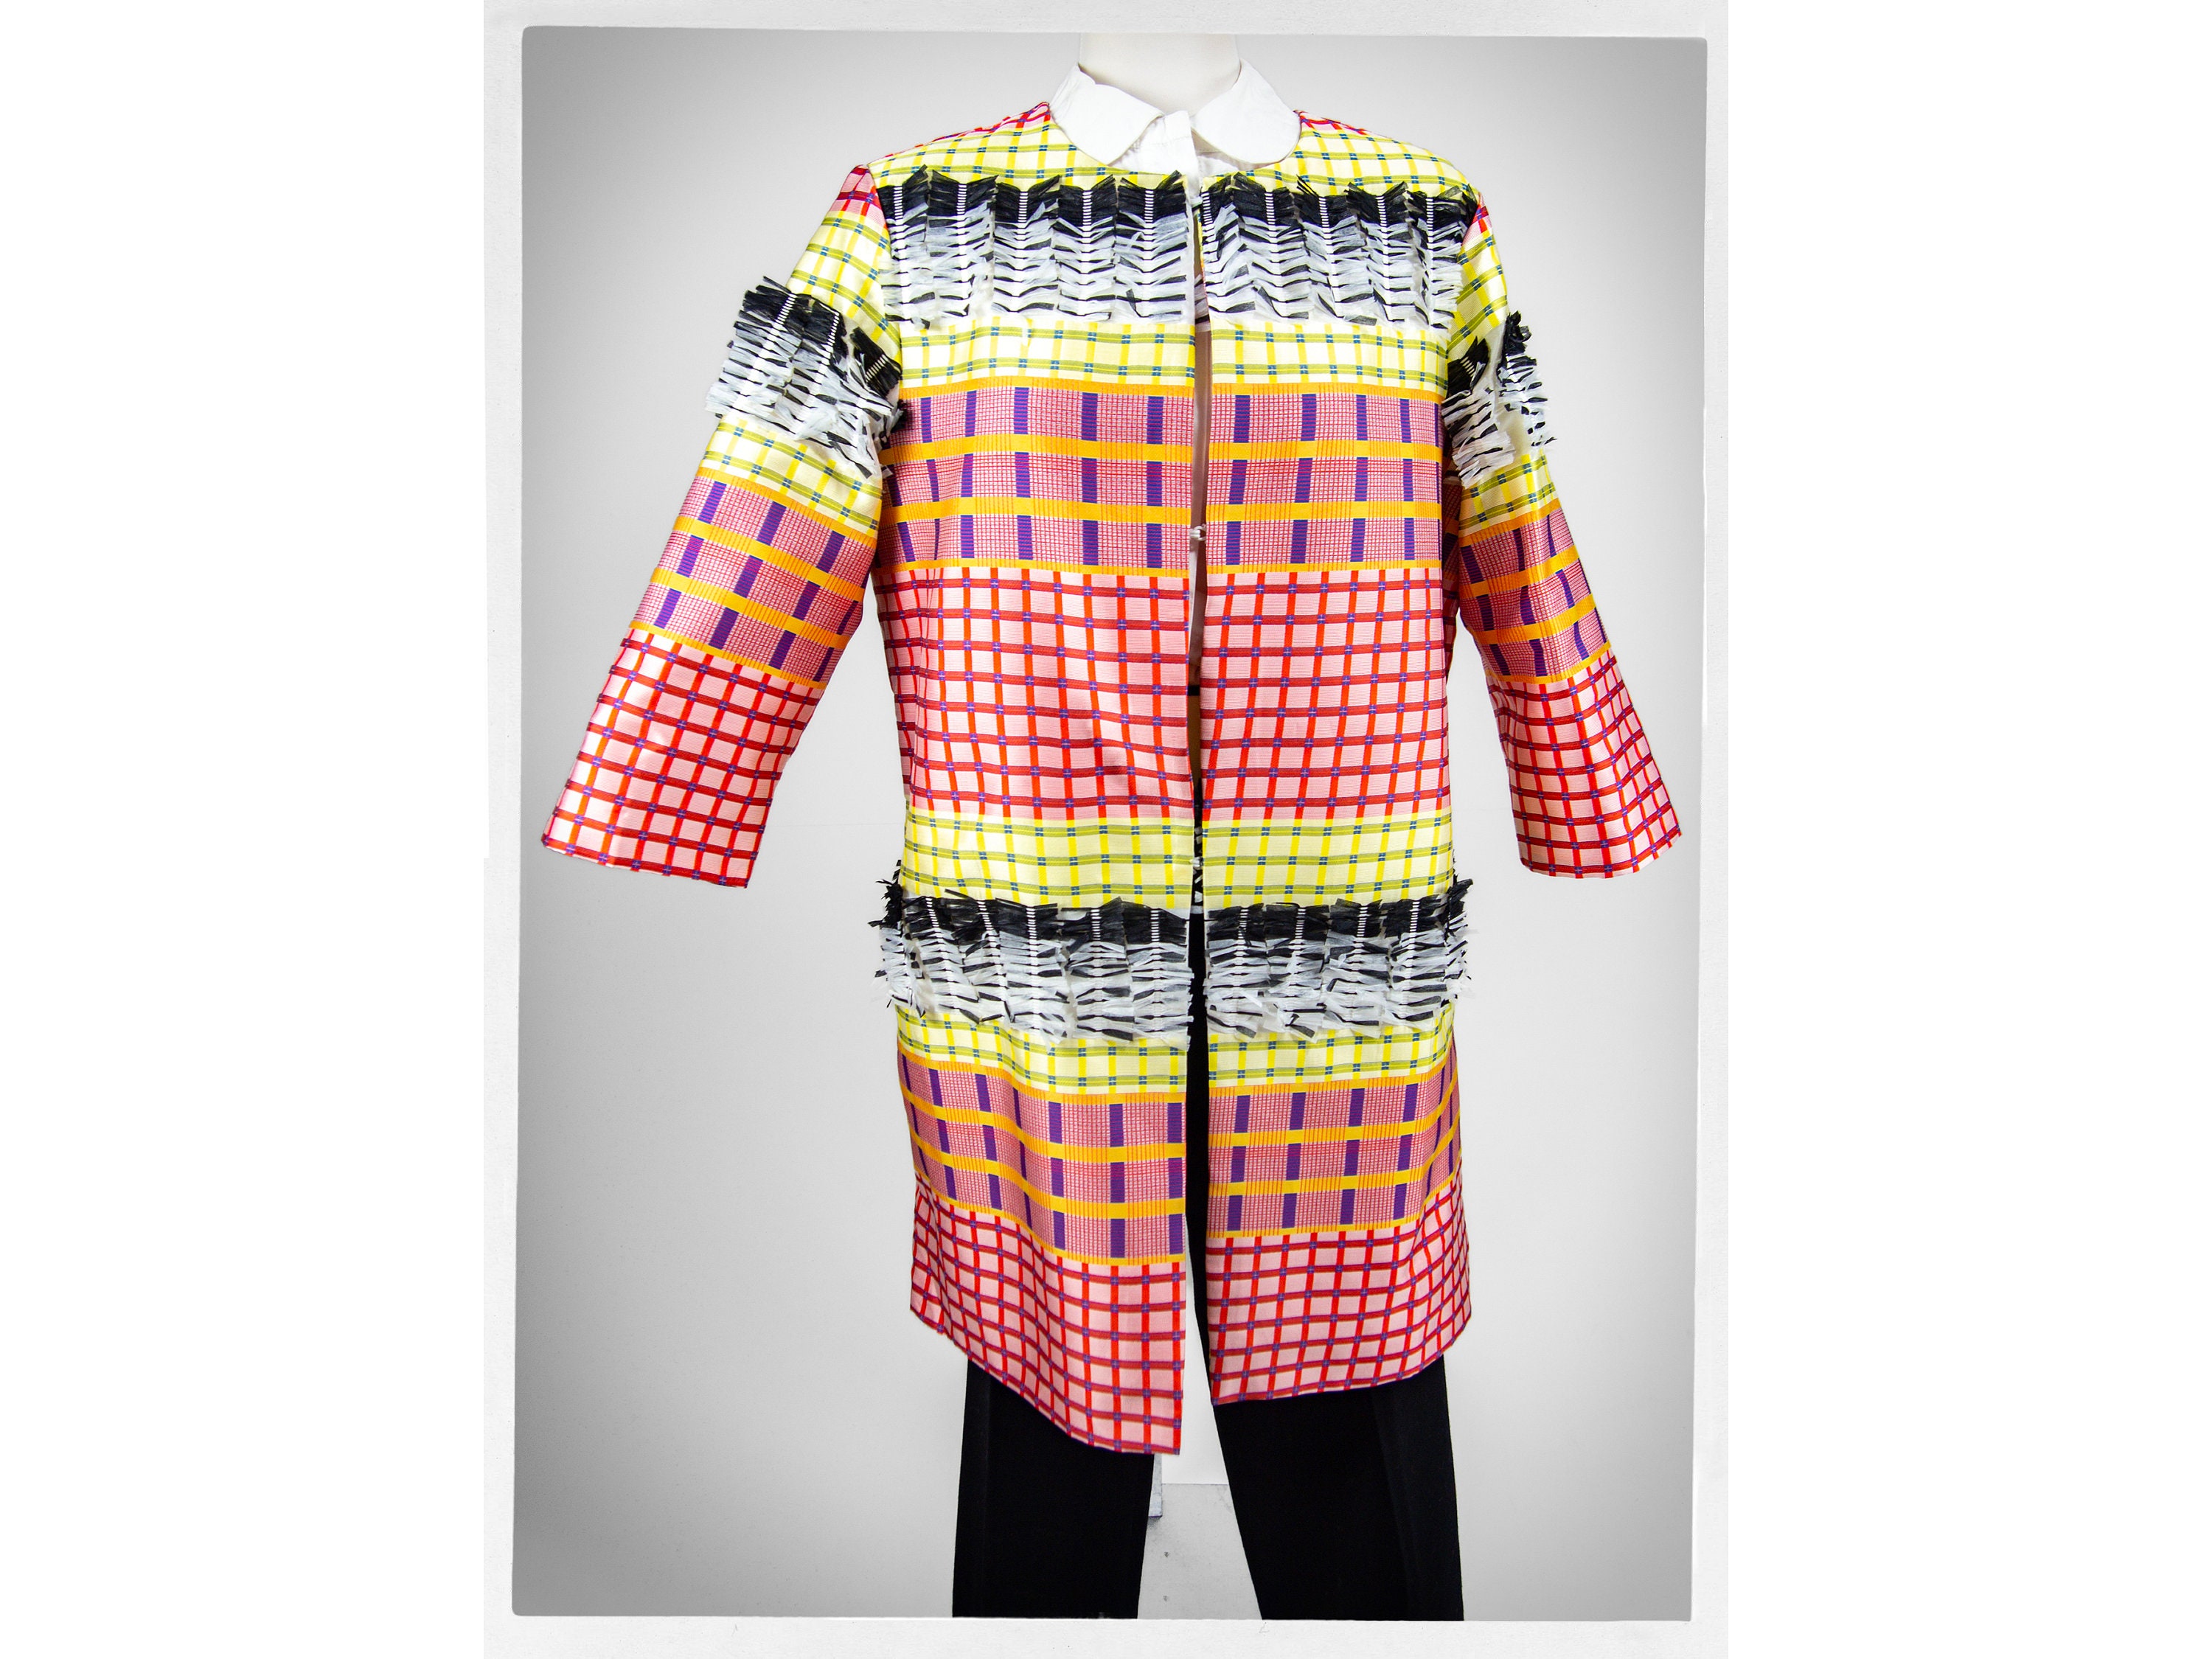 Vintage Hilary Radley Women's Full Length Beige Wool and Angora Coat, Size  14 